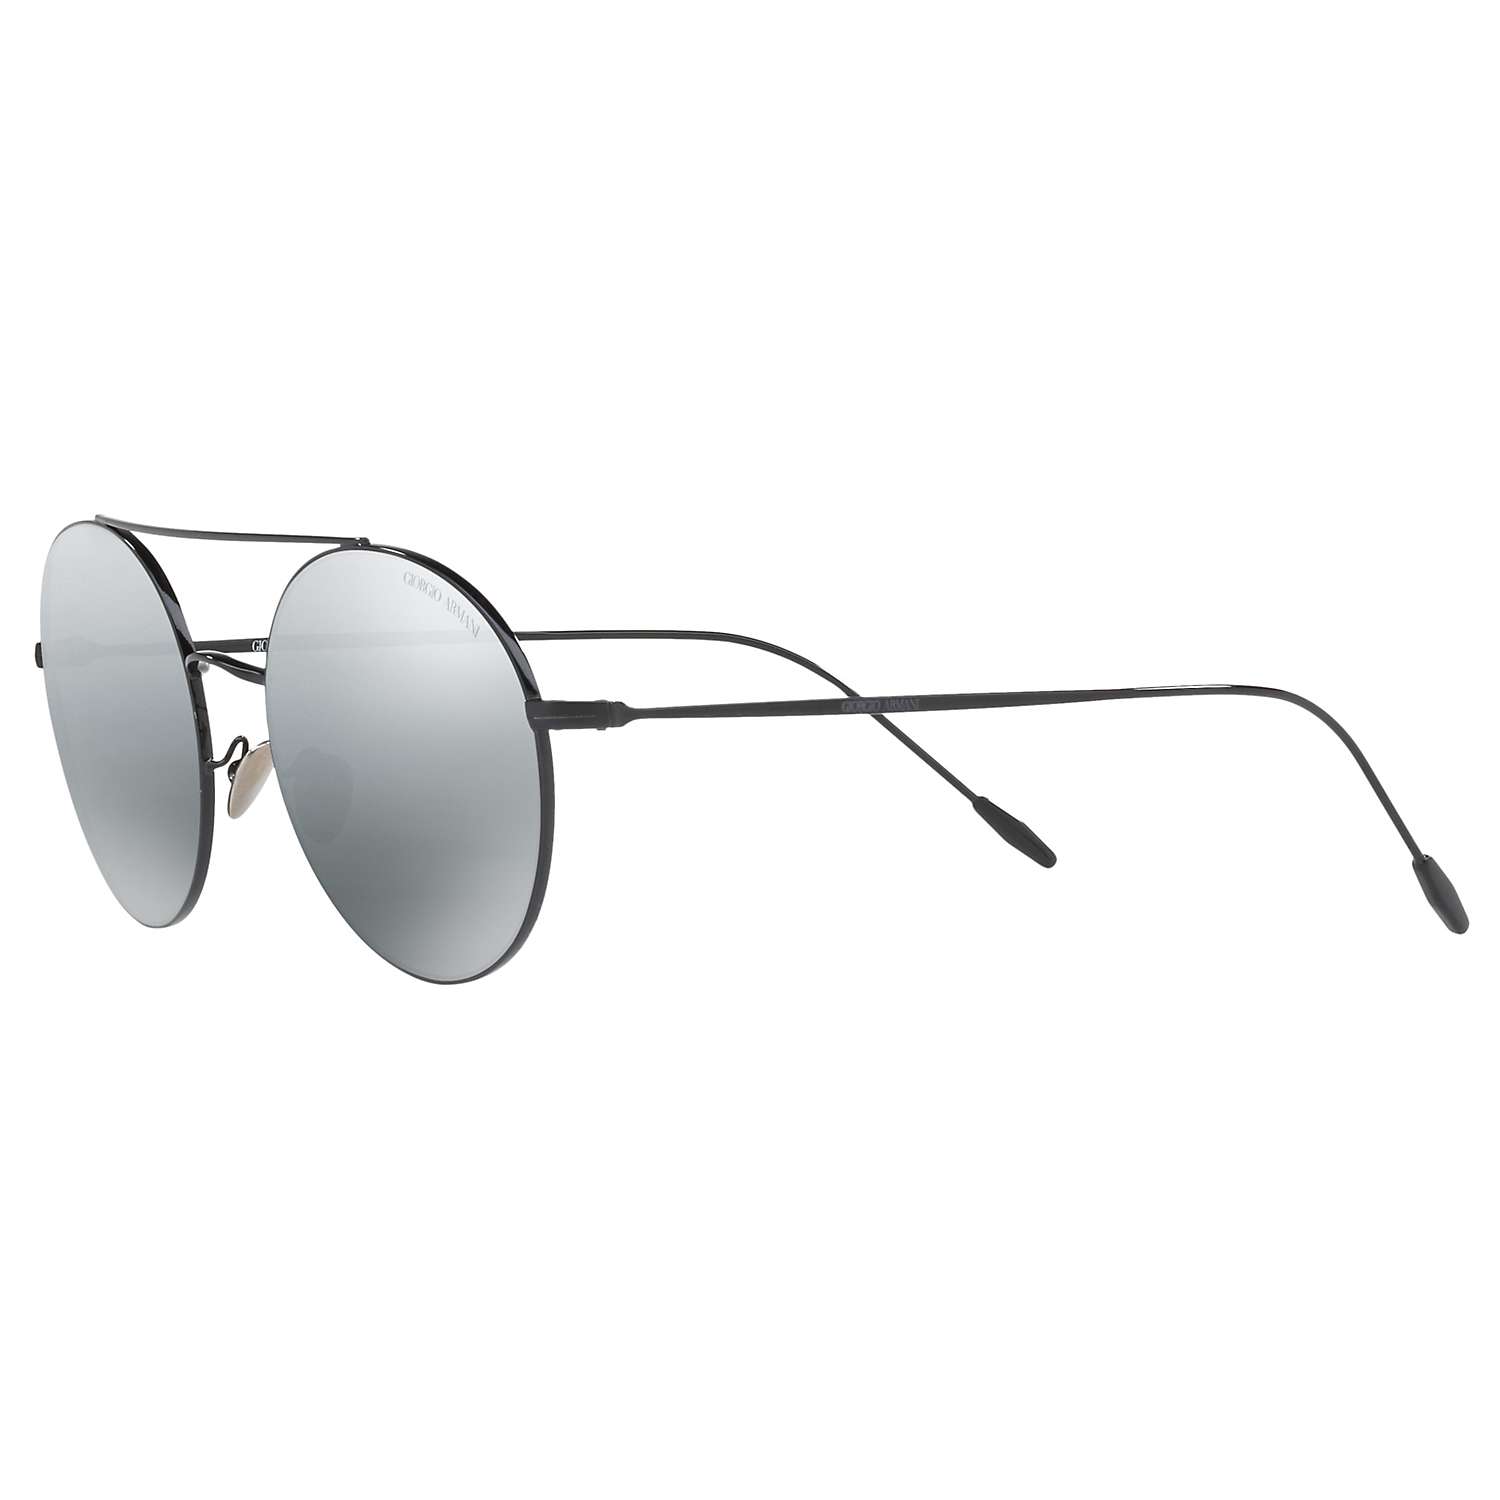 Buy Giorgio Armani AR6050 Round Sunglasses, Black/Mirror Grey Online at johnlewis.com